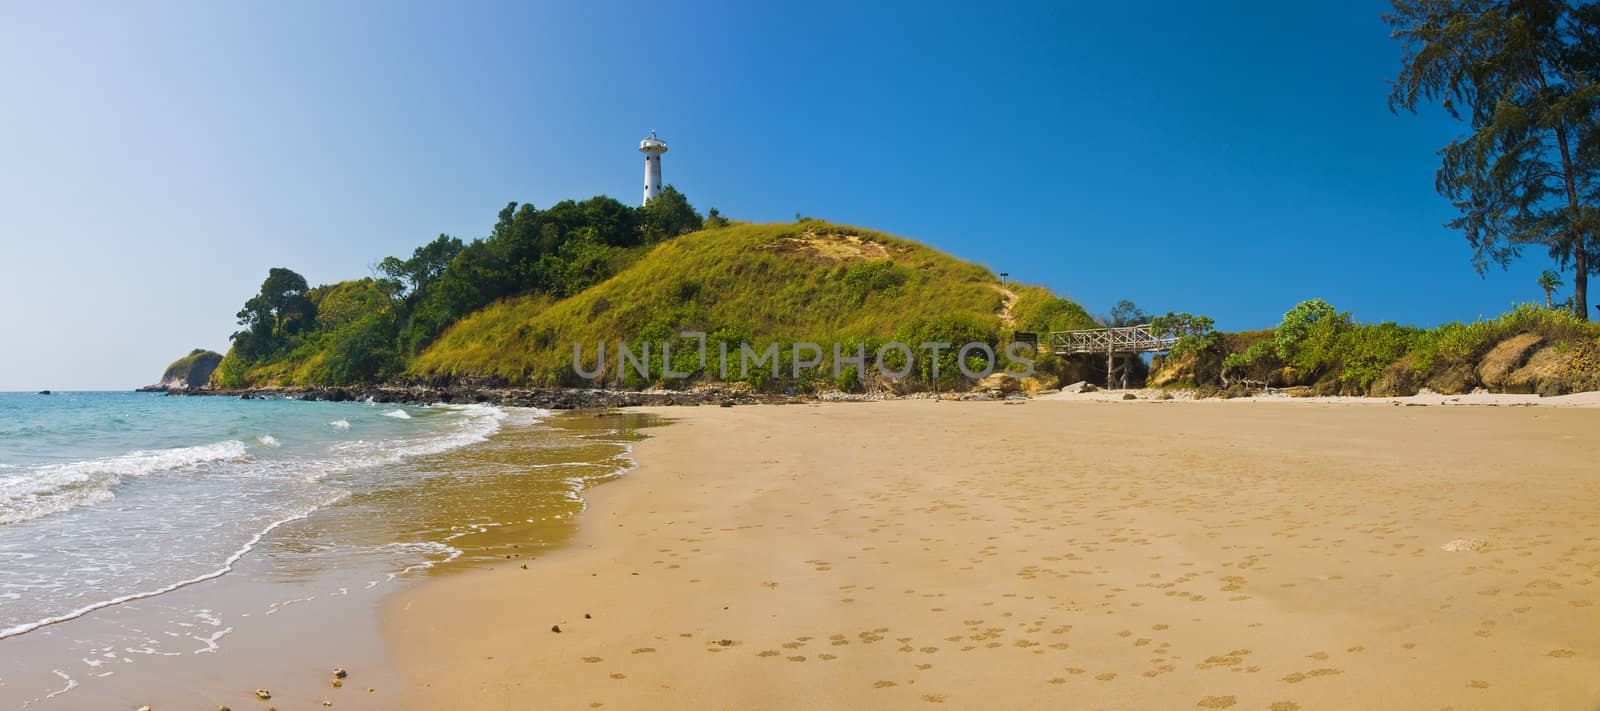 Panoramic shot of a tropical beach by liseykina